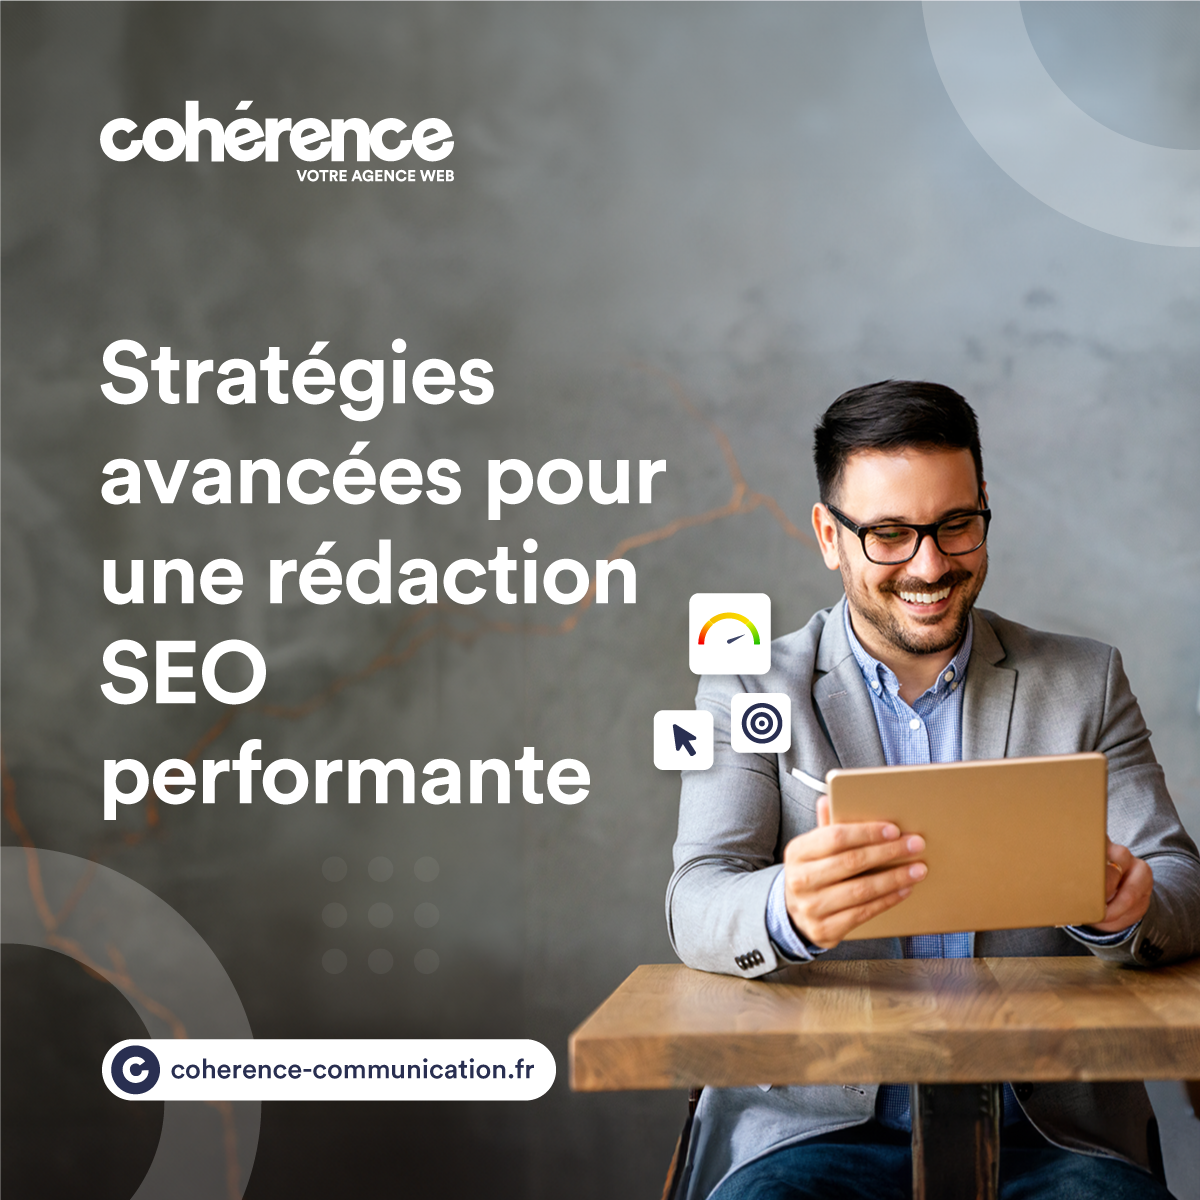 Coherence Agence Digitale Strategies Redaction SEO